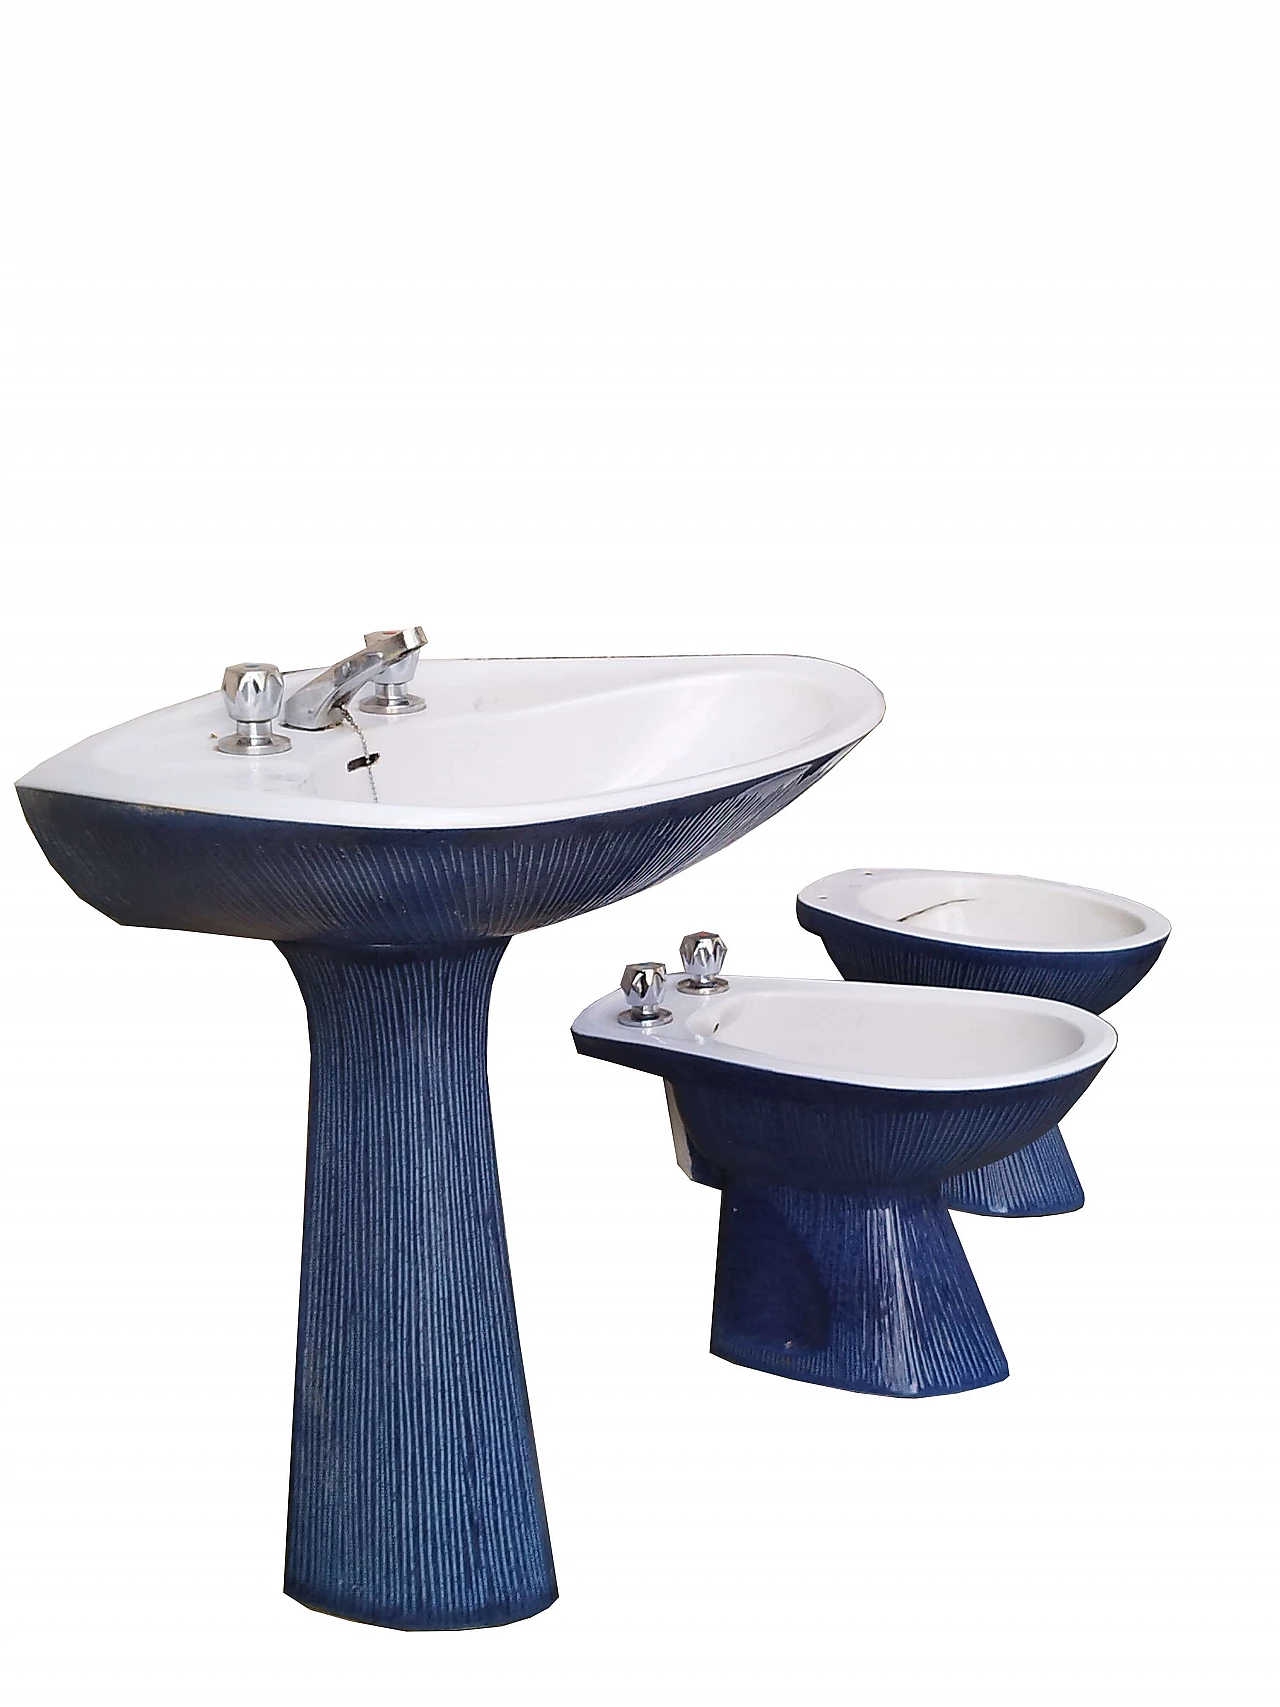 Gardena washbasin, toilet and bidet by Antonia Campi for S.C.I. Laveno, 1970s 3